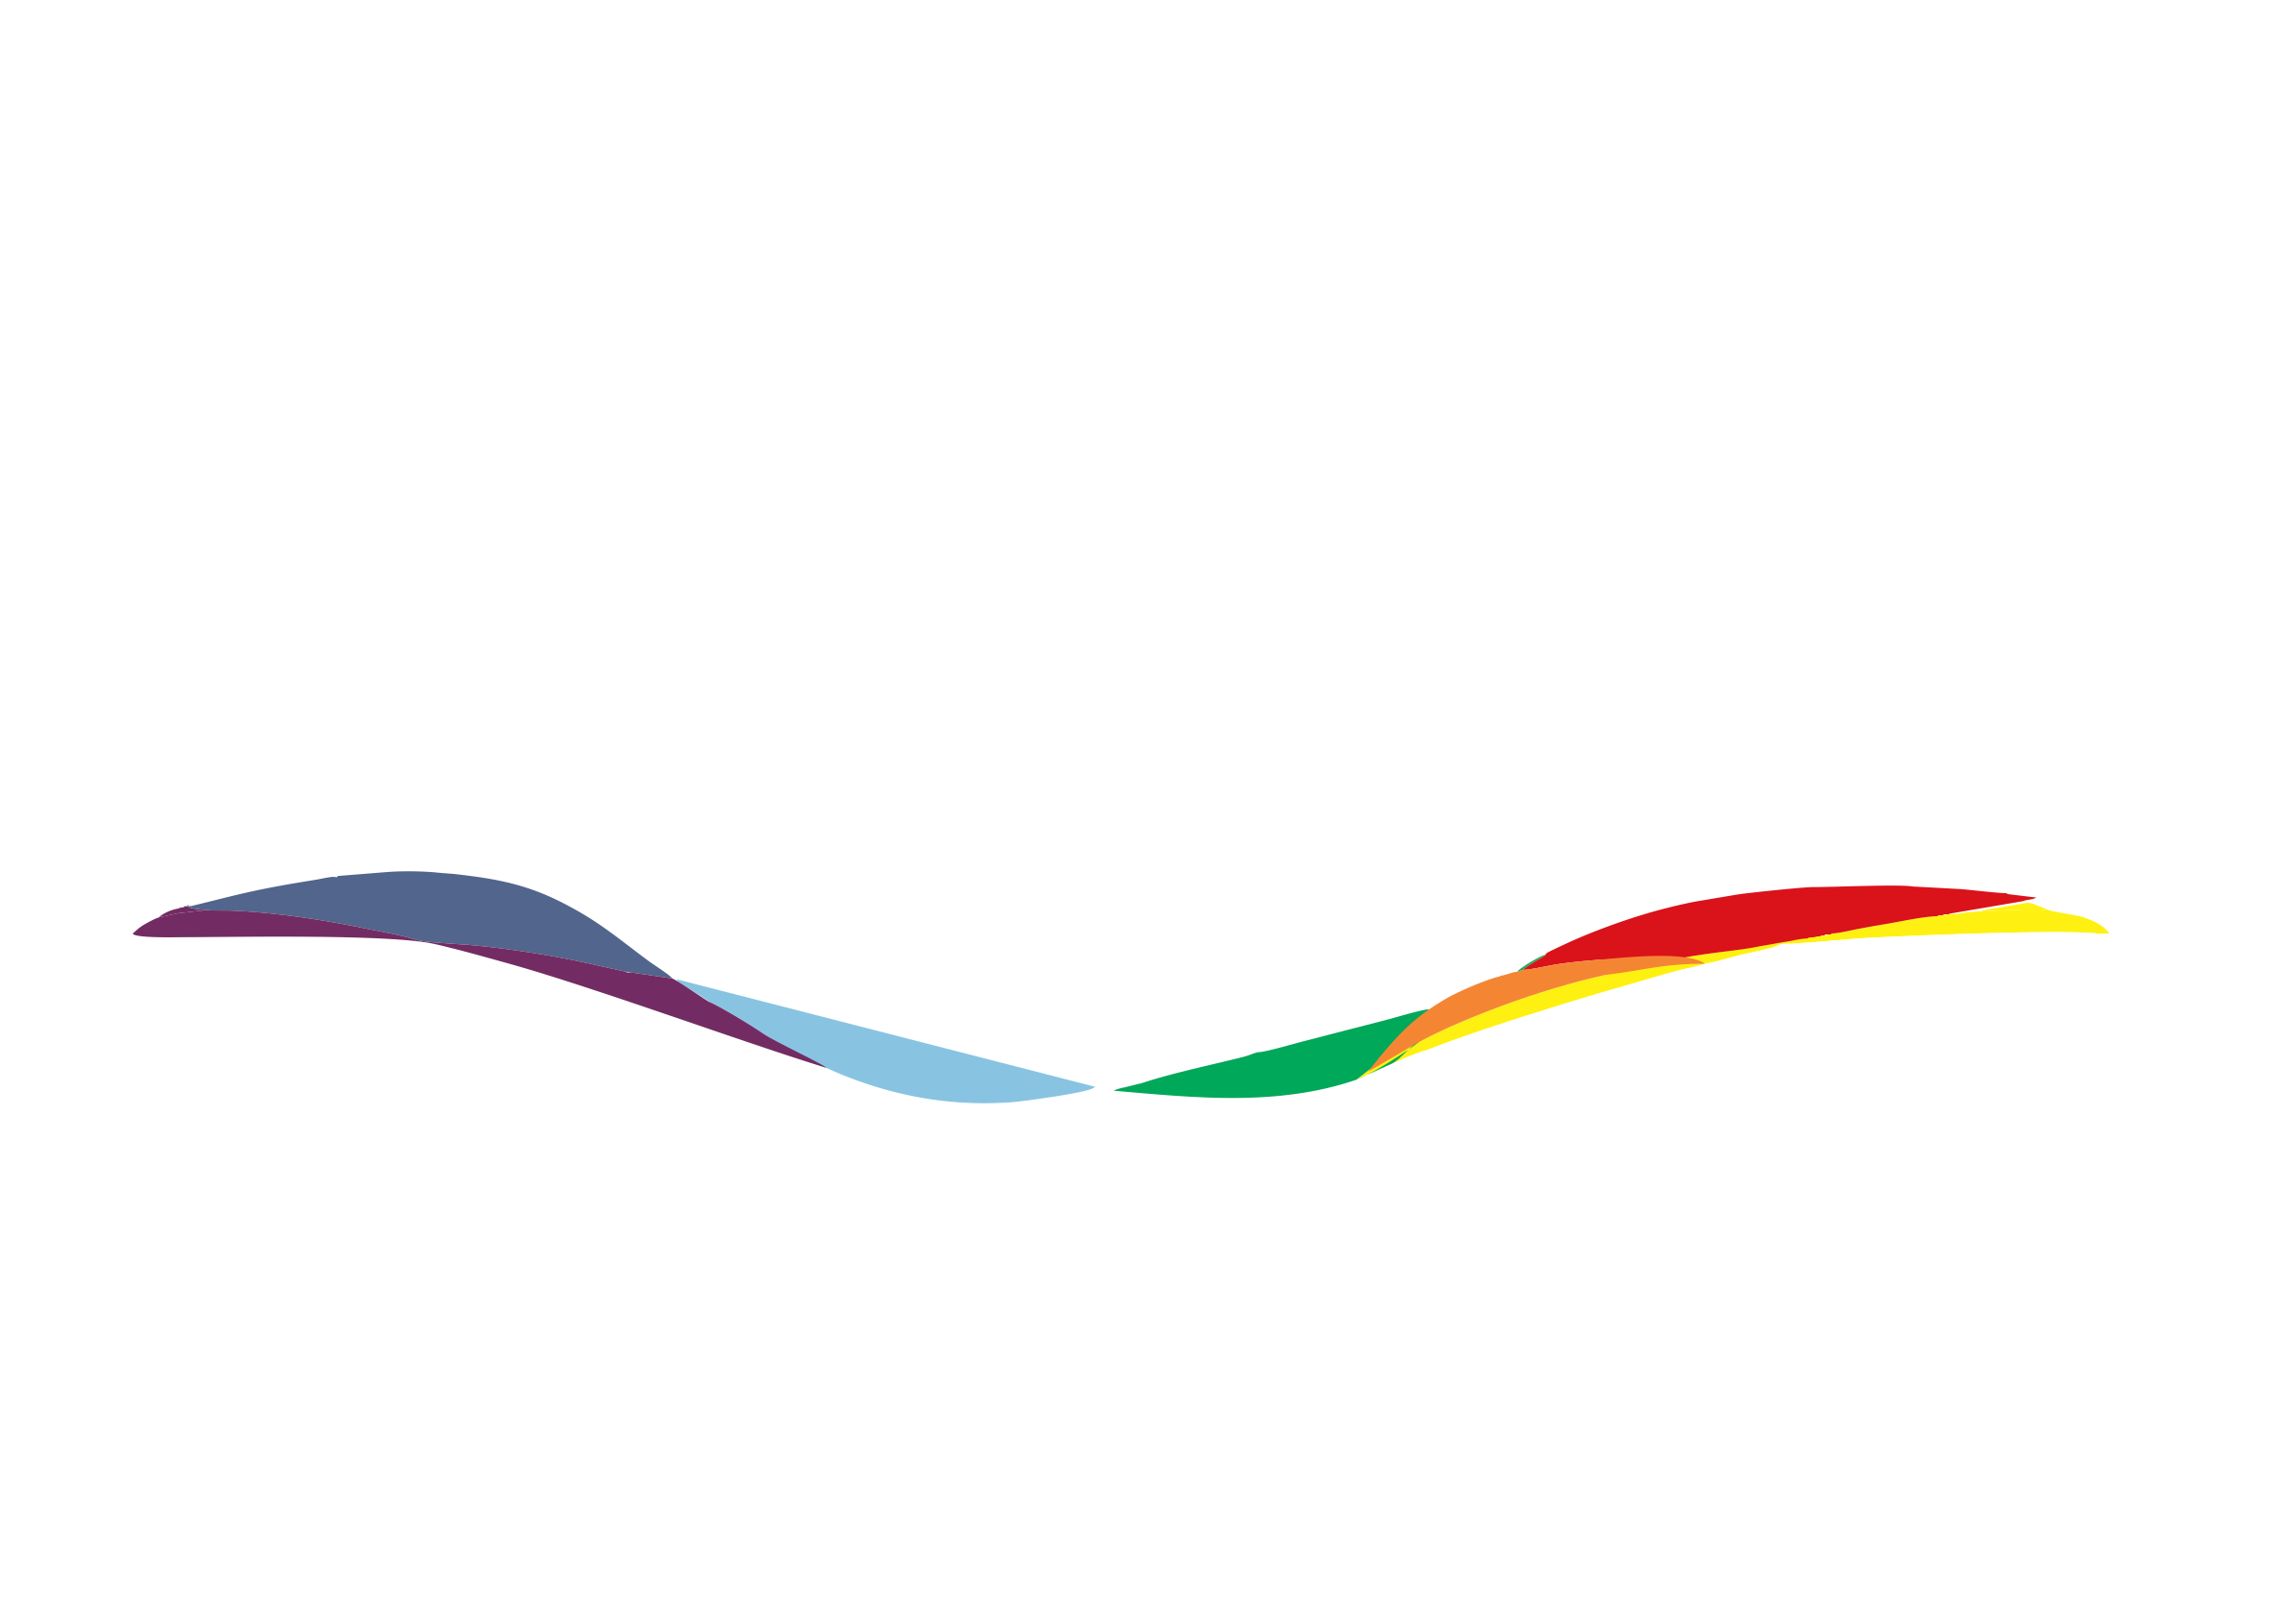 BRAZILIAN JOURNAL OF LATIN AMERICAN STUDIES